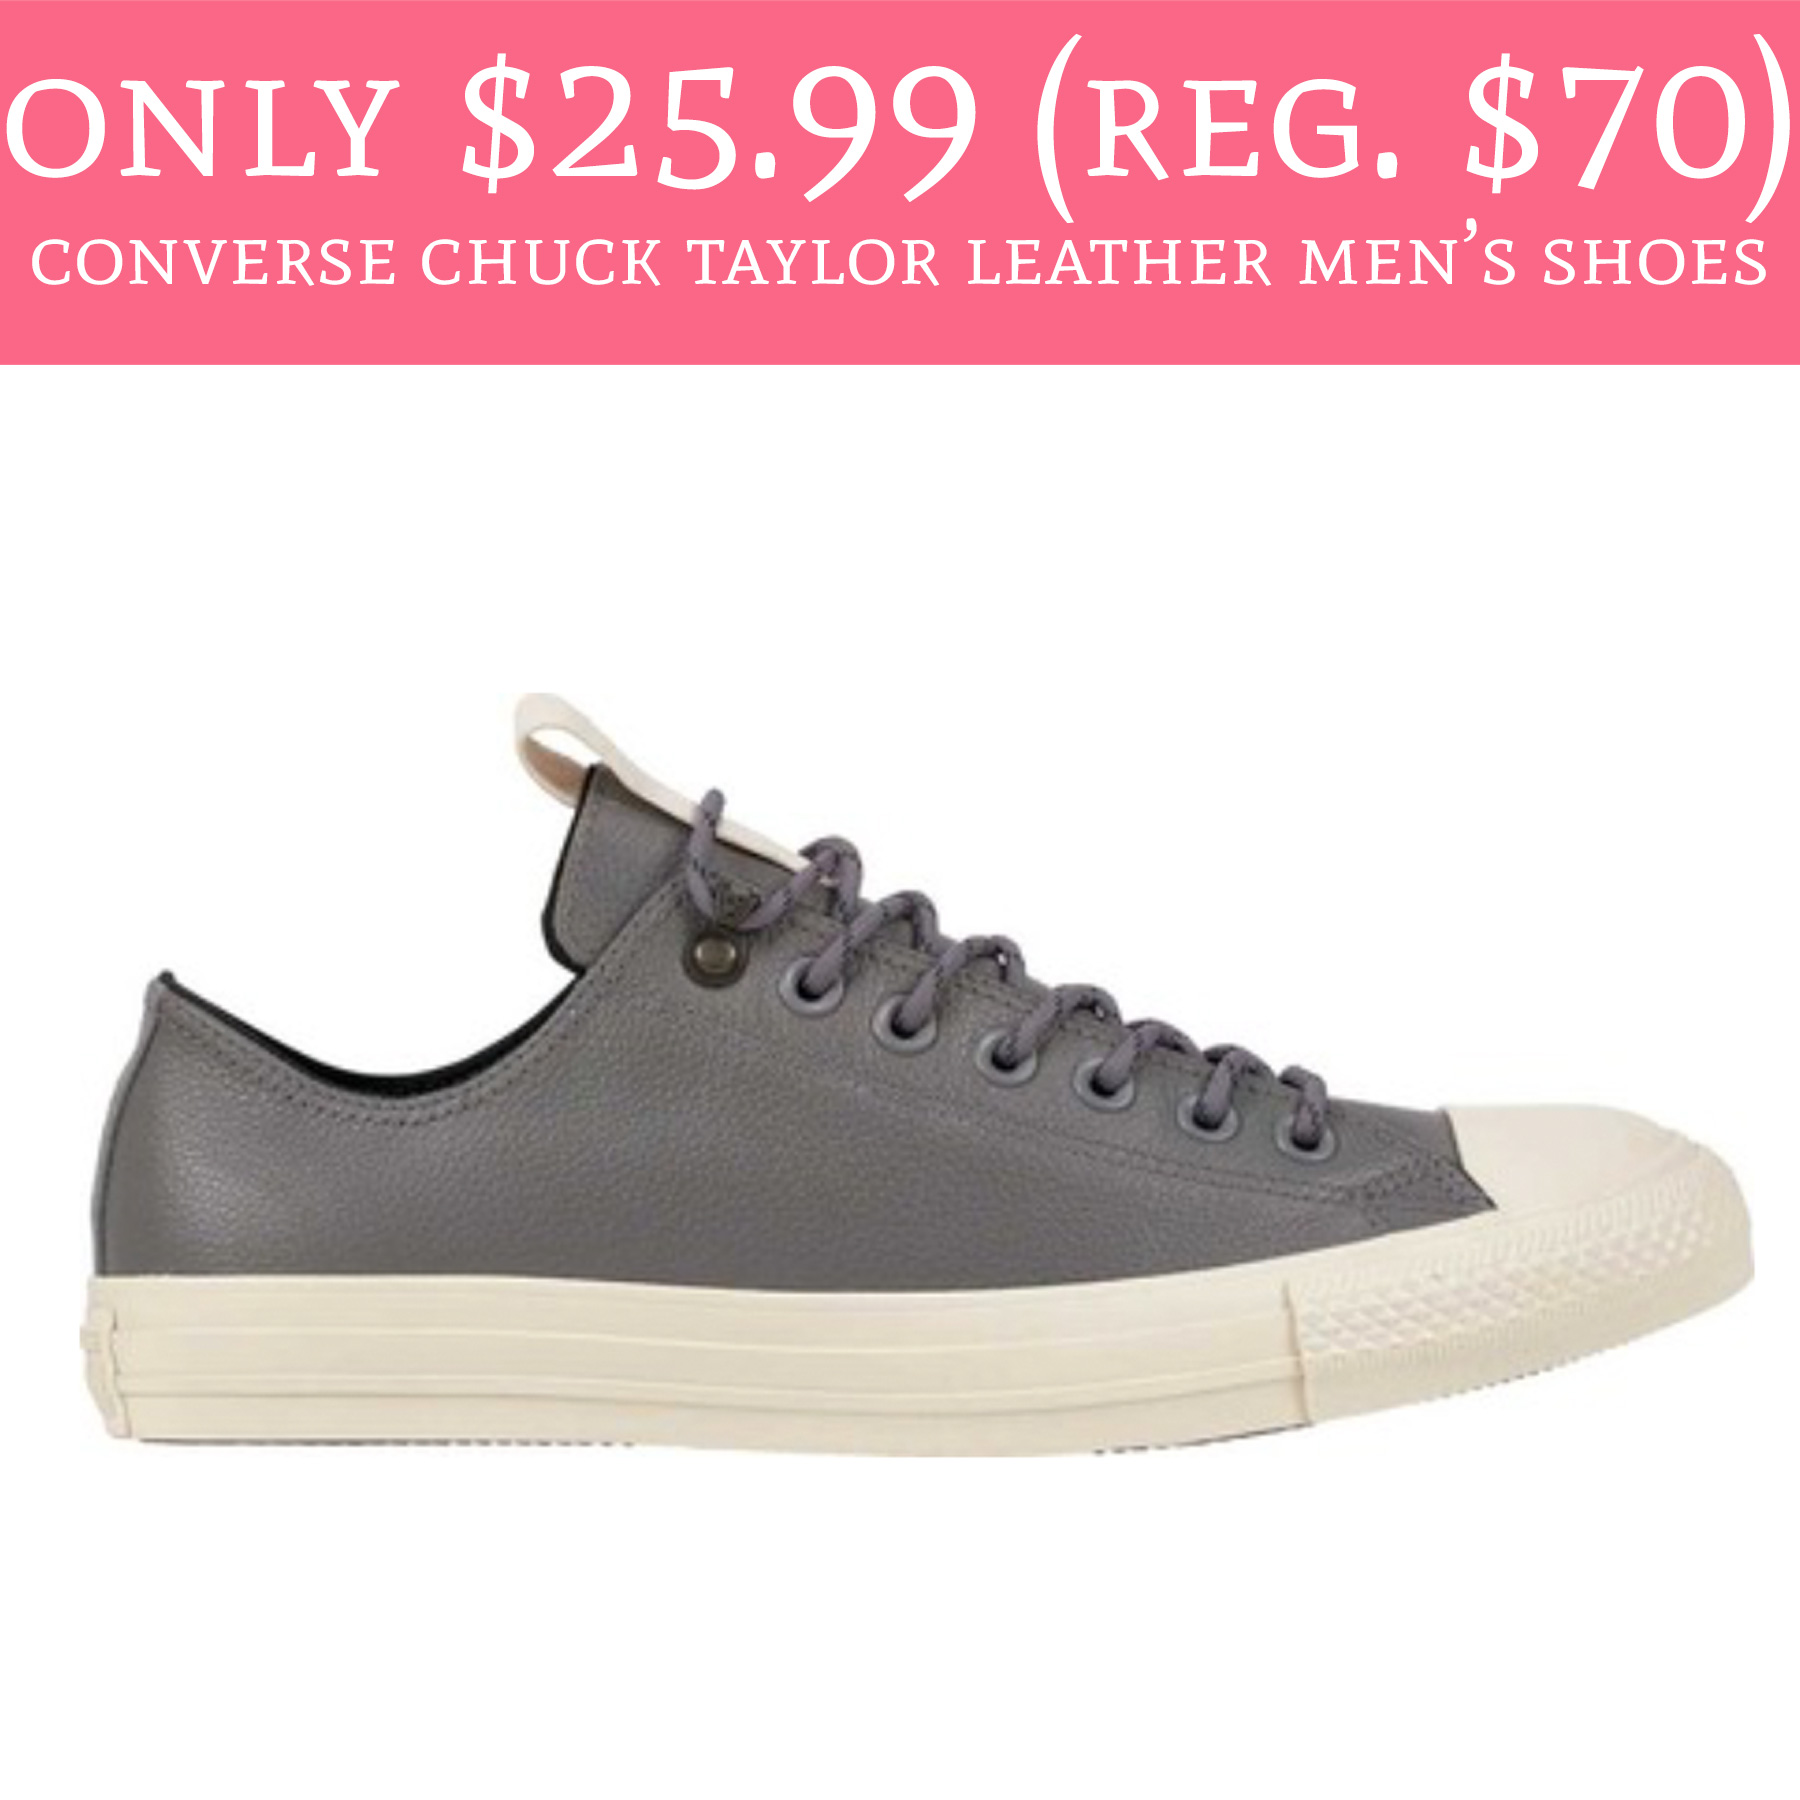 converse-chuck-taylor-leather-men’s-shoes-1